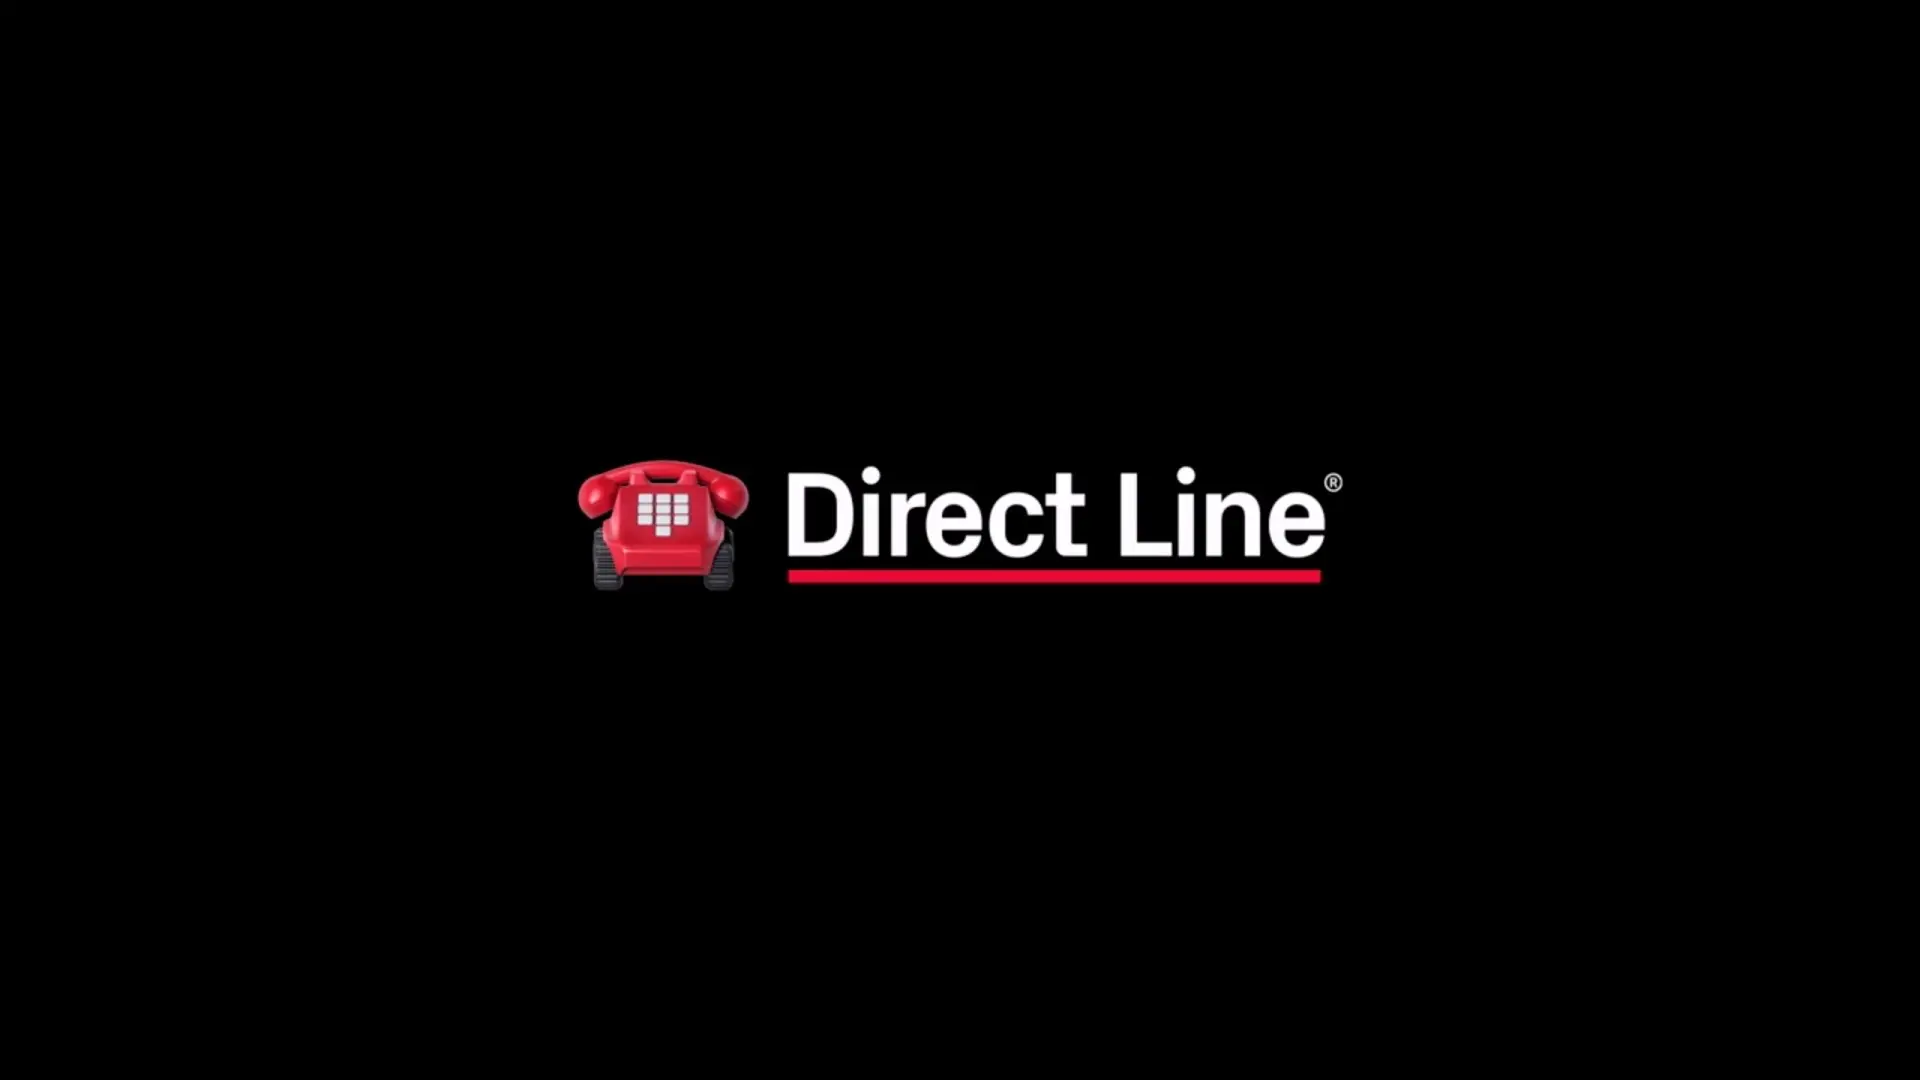 Direct Line logo